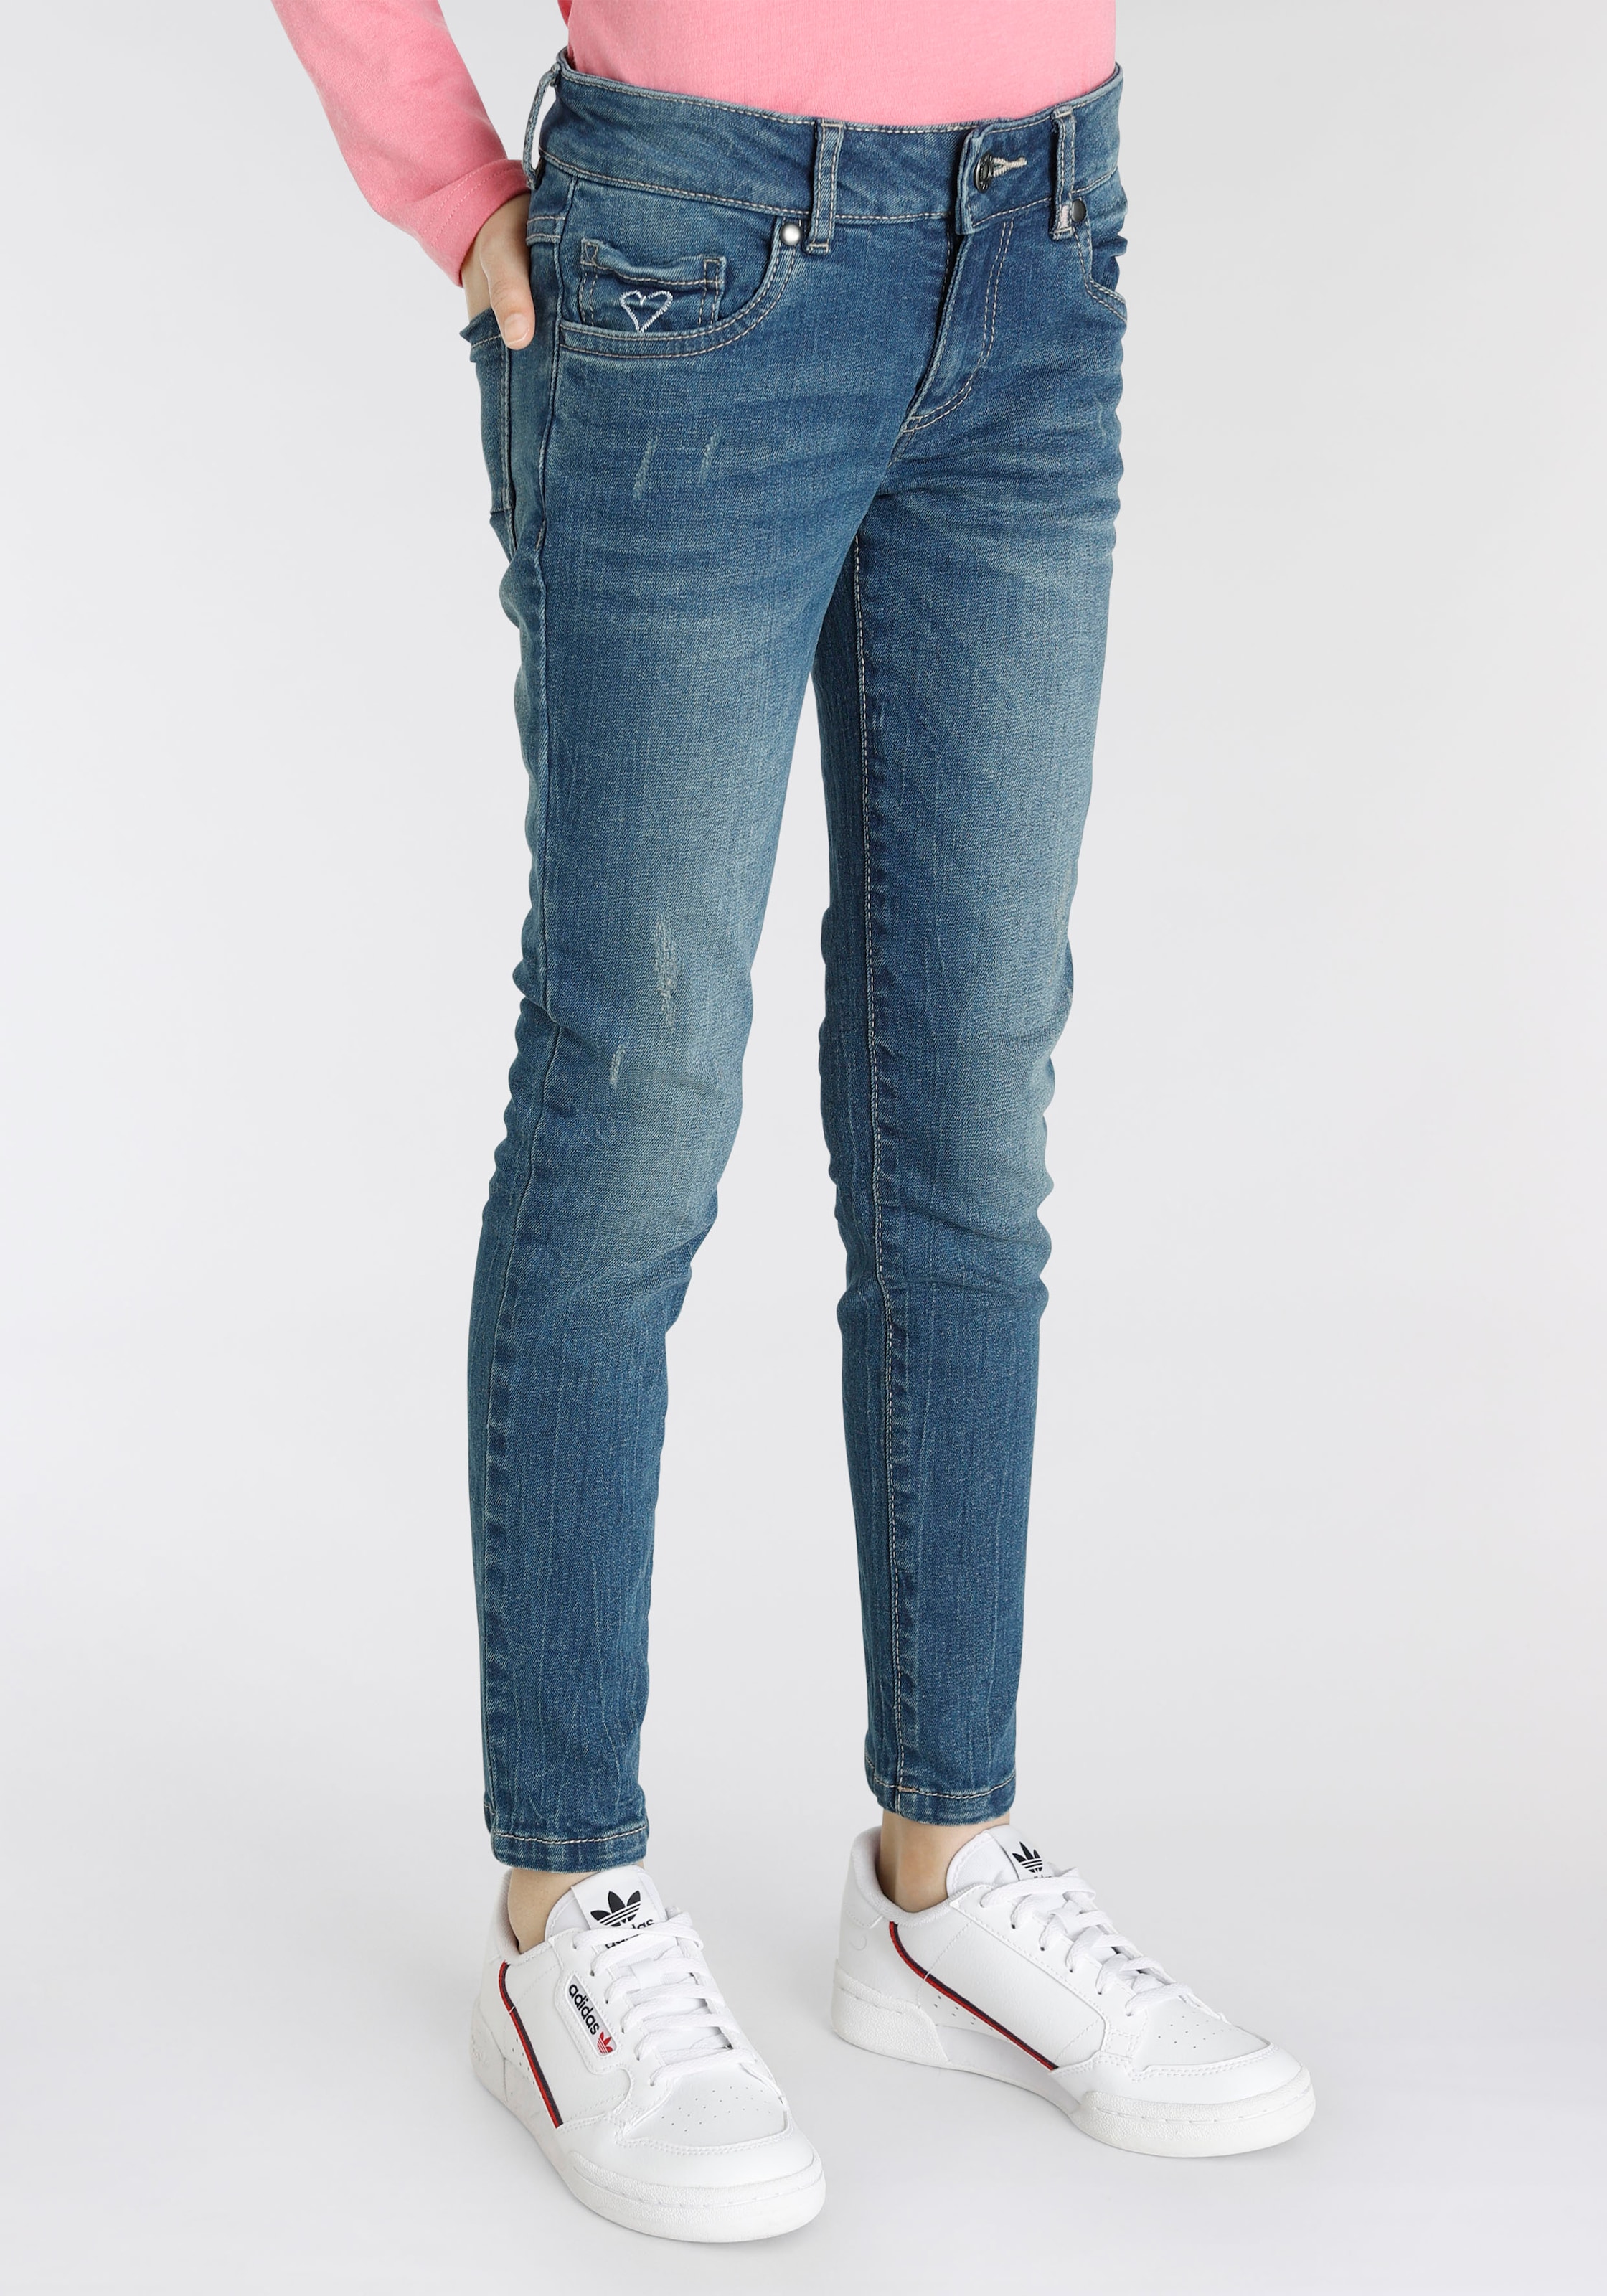 & MARKE! Kickin online »Super Kickin NEUE & Skinny«, für Alife kaufen Kids. Alife Skinny-fit-Jeans